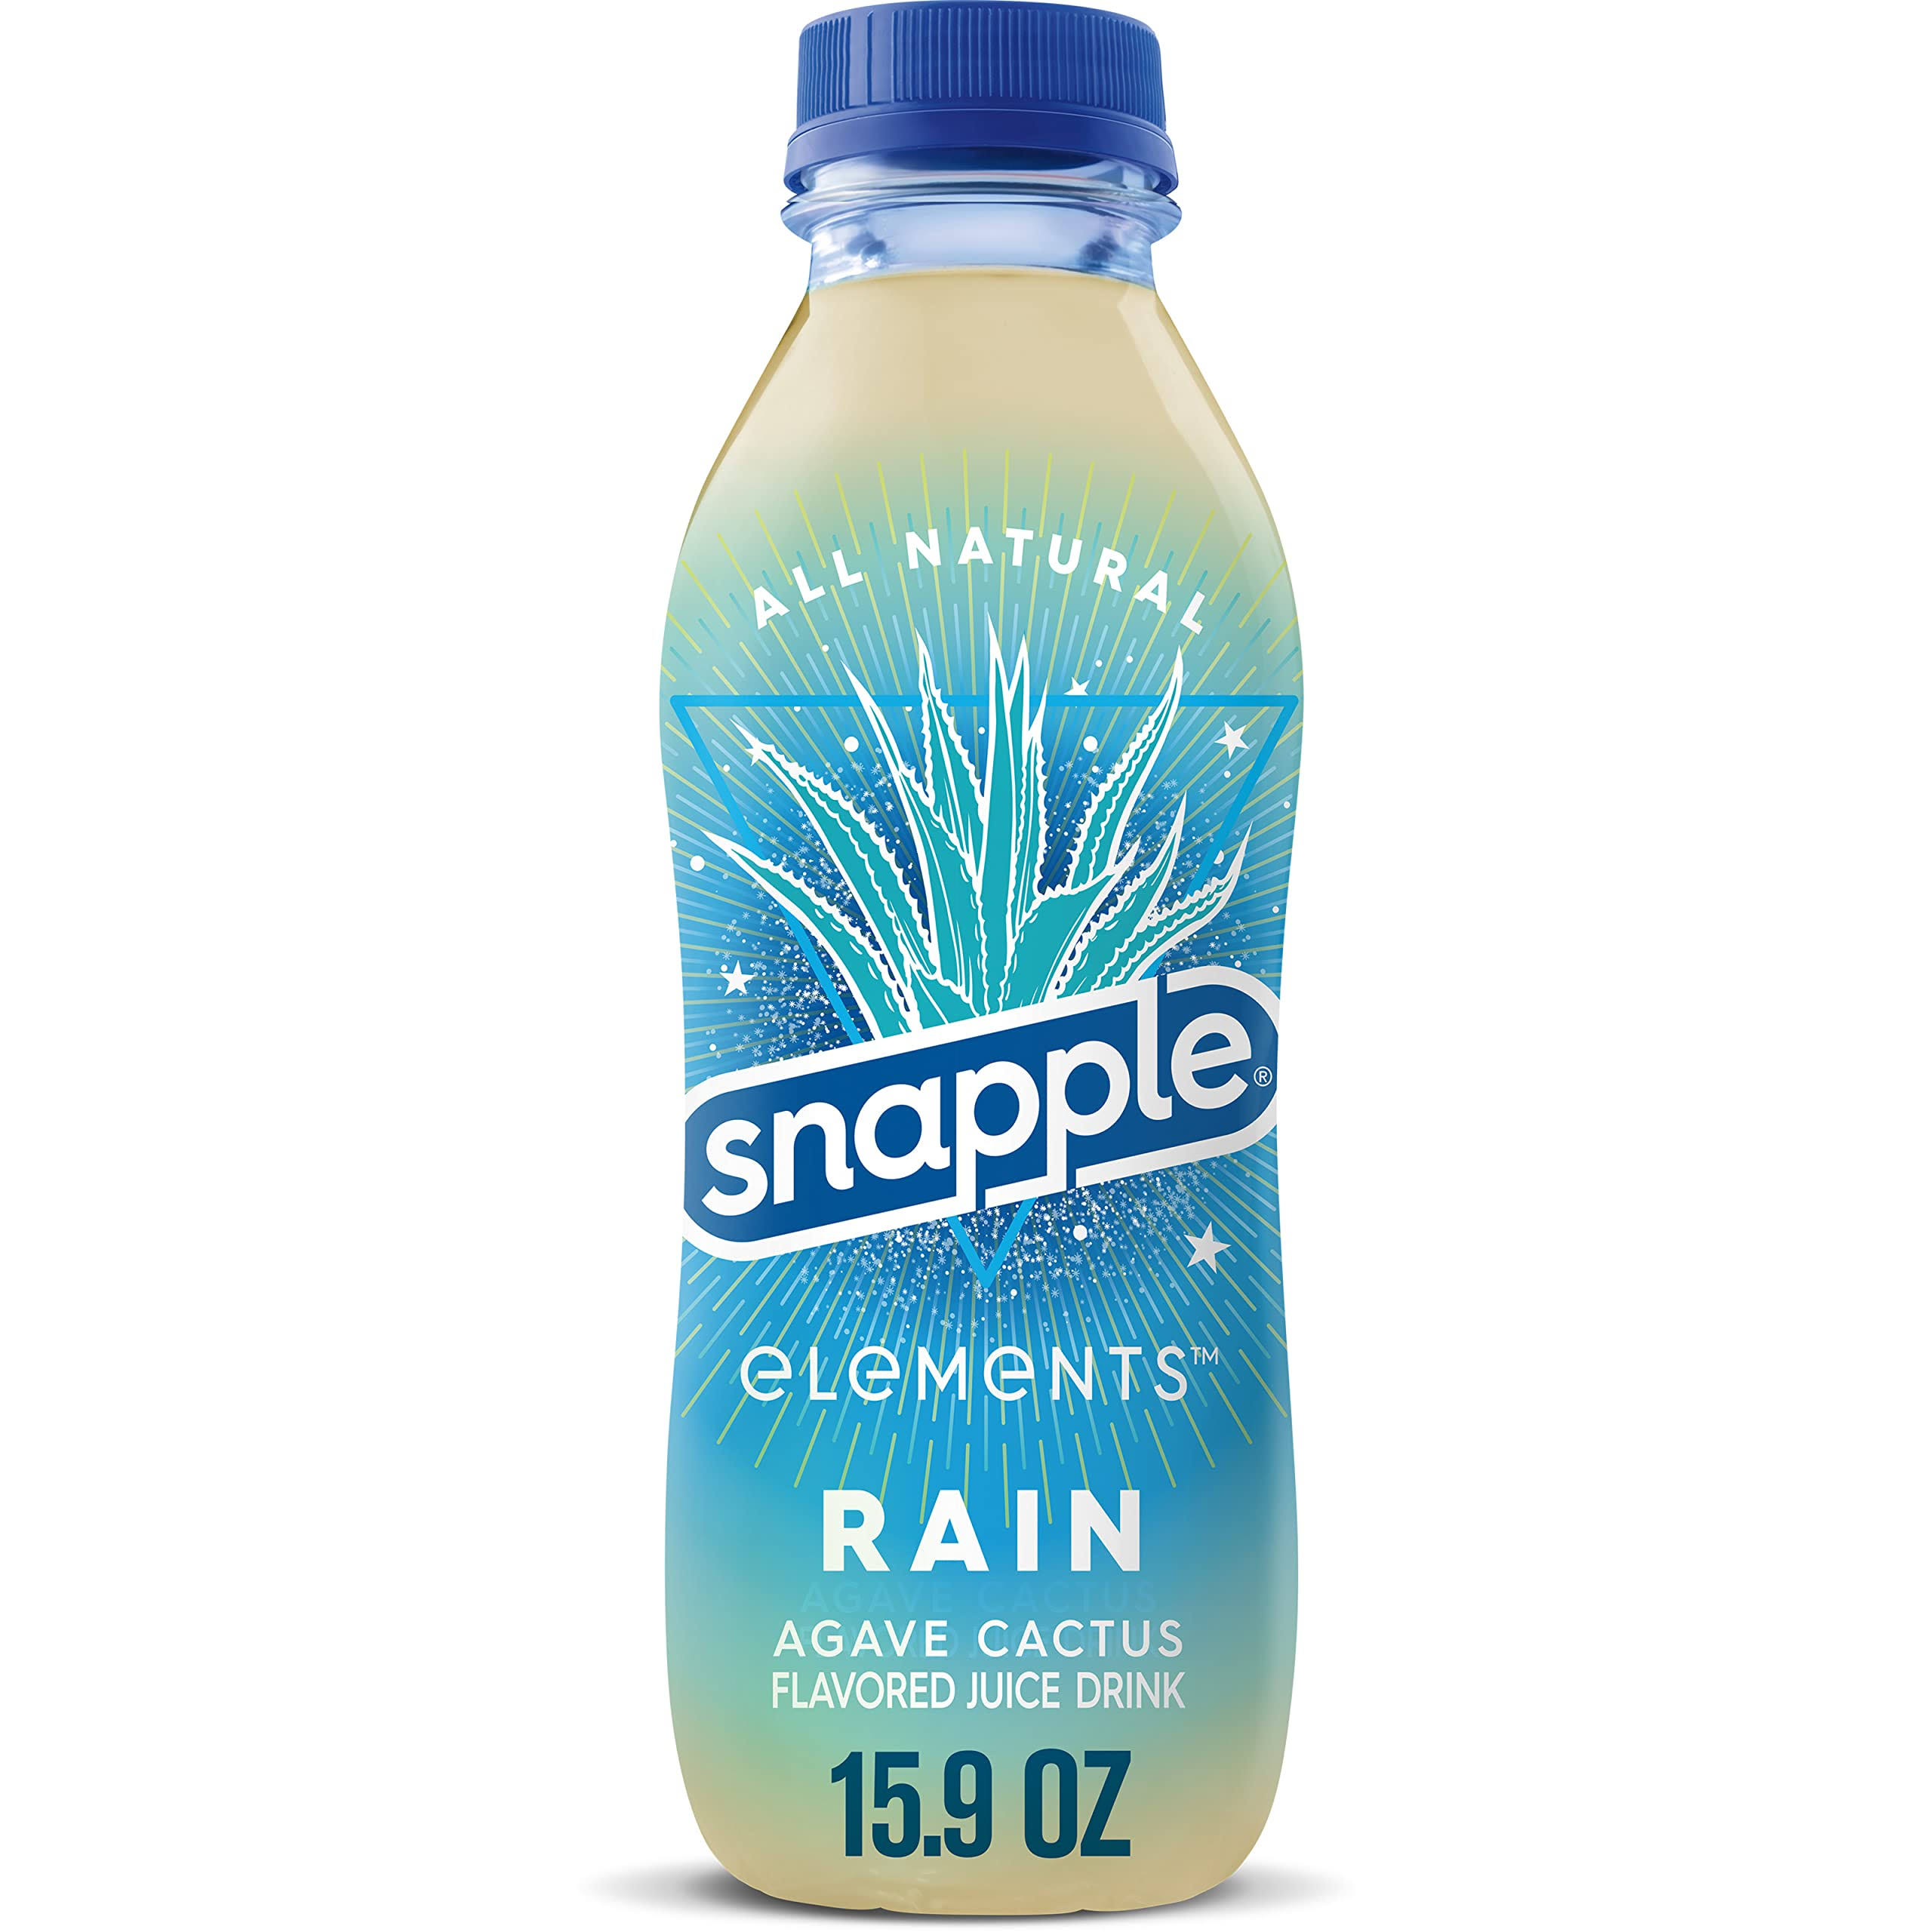 Snapple Elements Rain Agave Cactus Juice